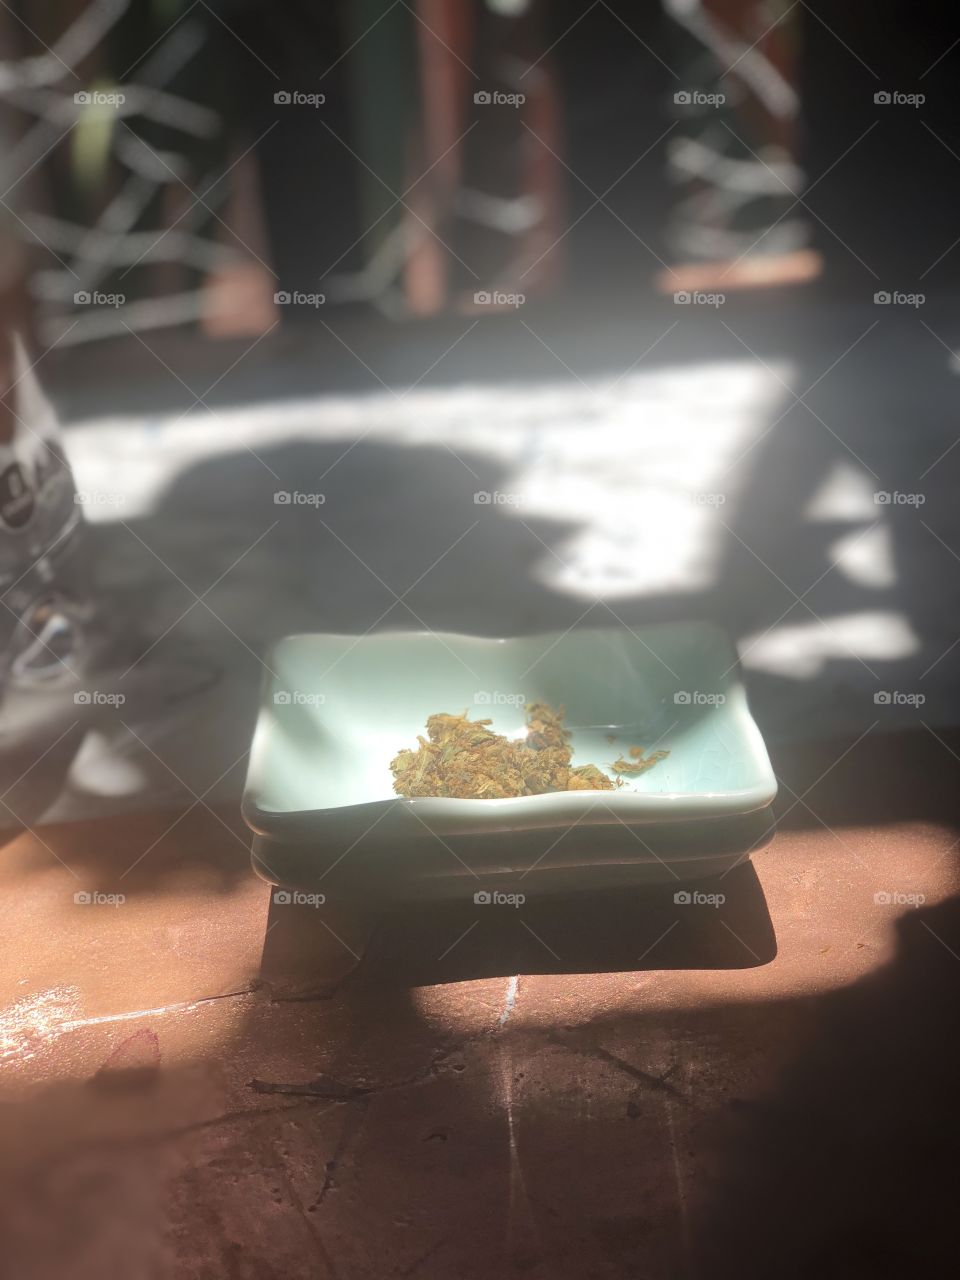 Marijuana in ceramic dish in daylight with shadows